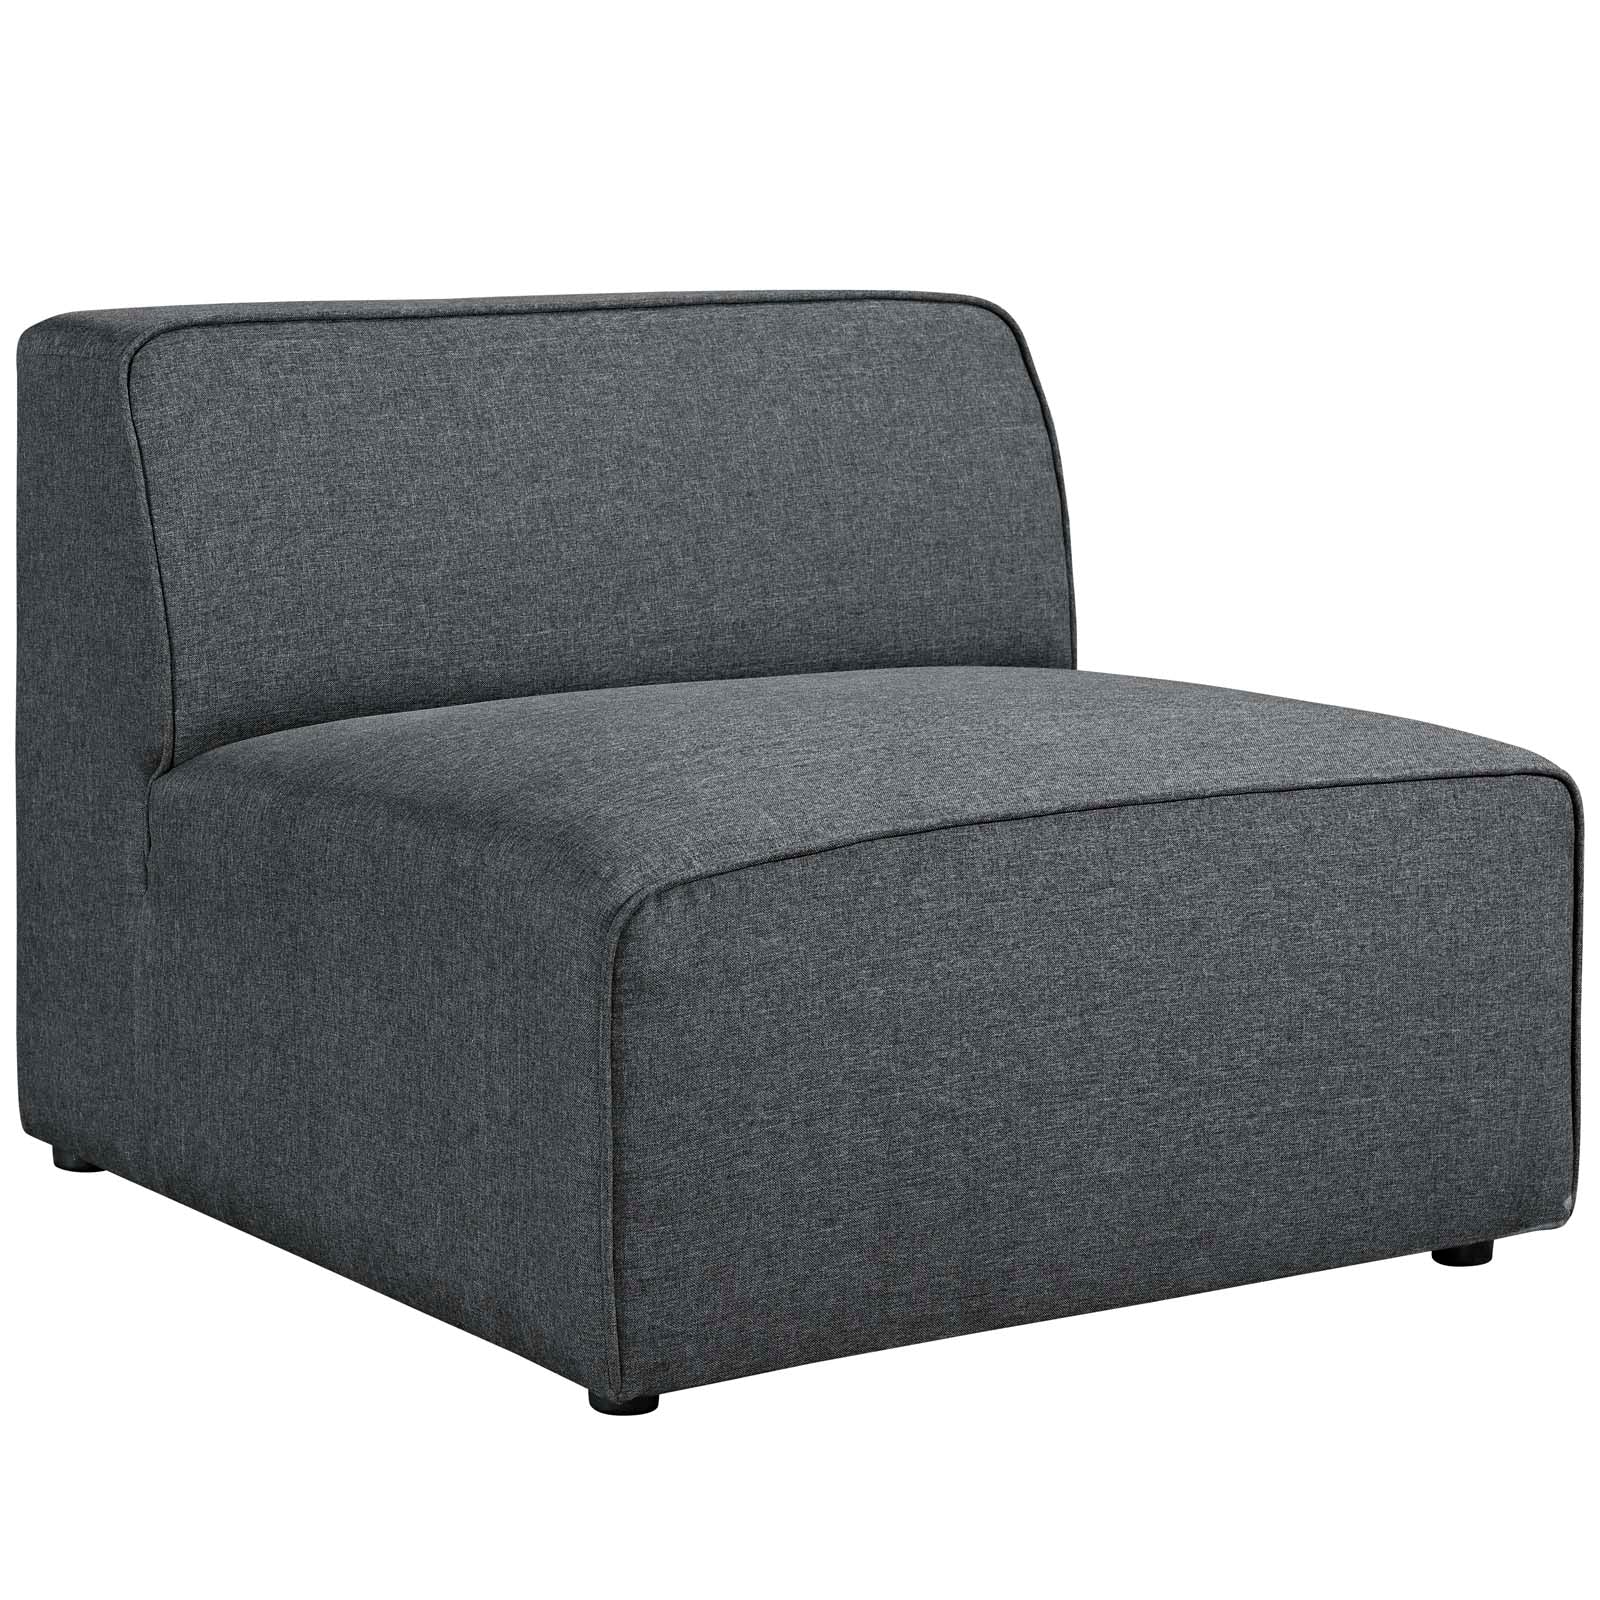 Mingle 7 Piece Upholstered Fabric Sectional Sofa Set